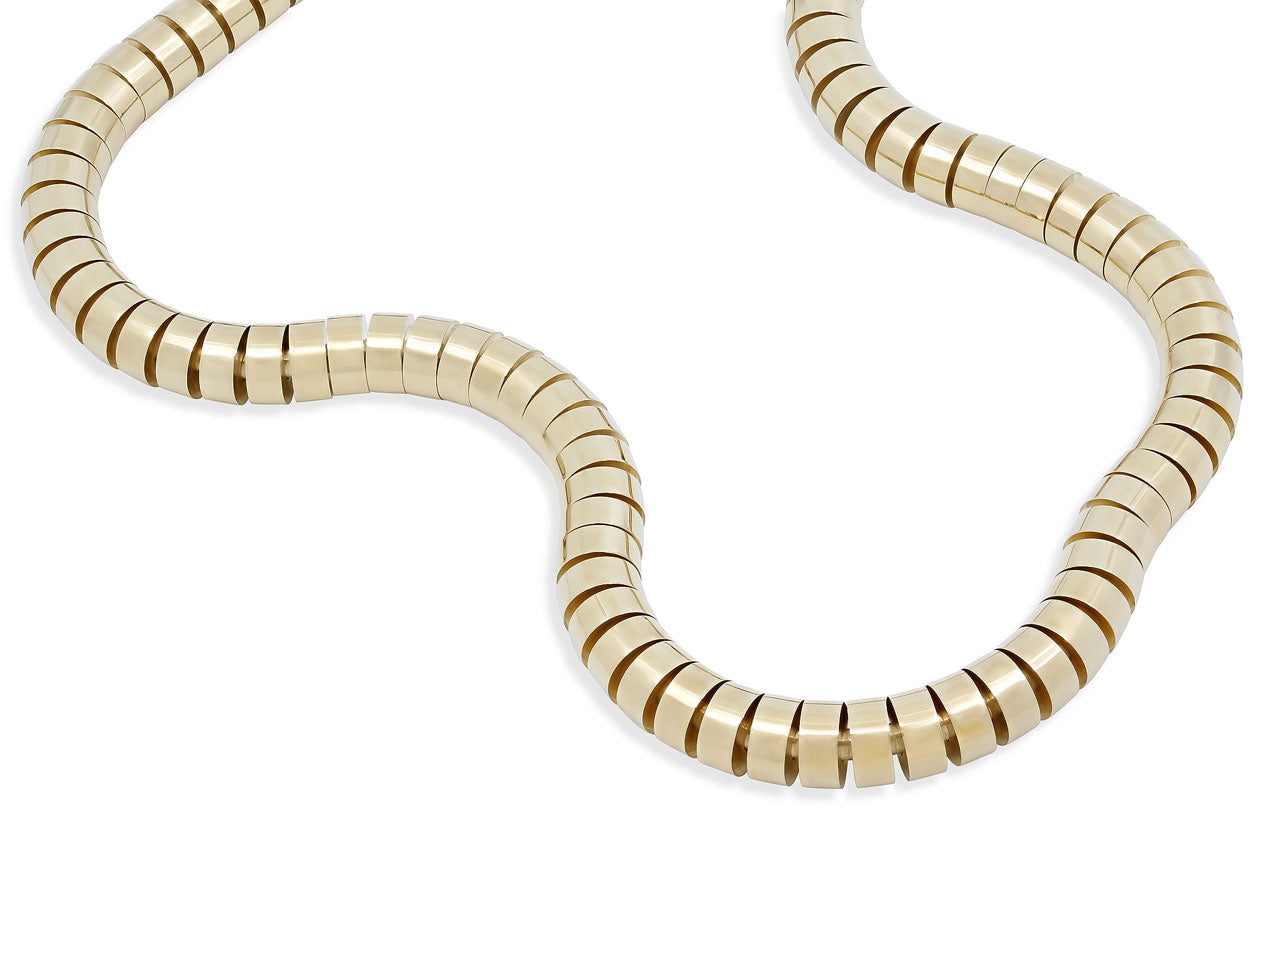 Italian Flexible Tube Necklace in 18K Gold, by Beladora